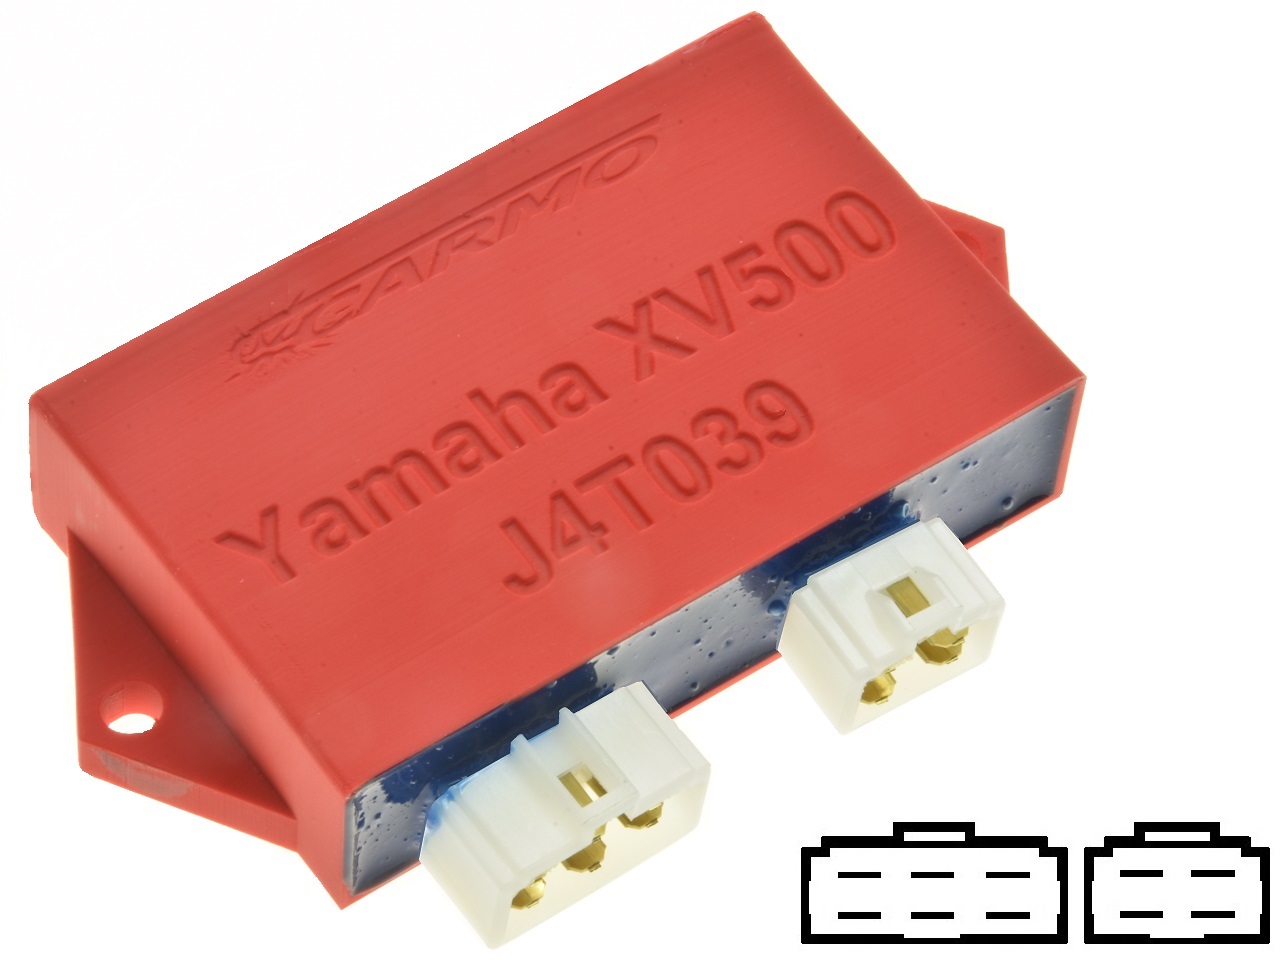 Yamaha XV500 Virago igniter ignition module CDI TCI Box (J4T039, 4FT-00, 4FT-82305-00-00) - Click Image to Close